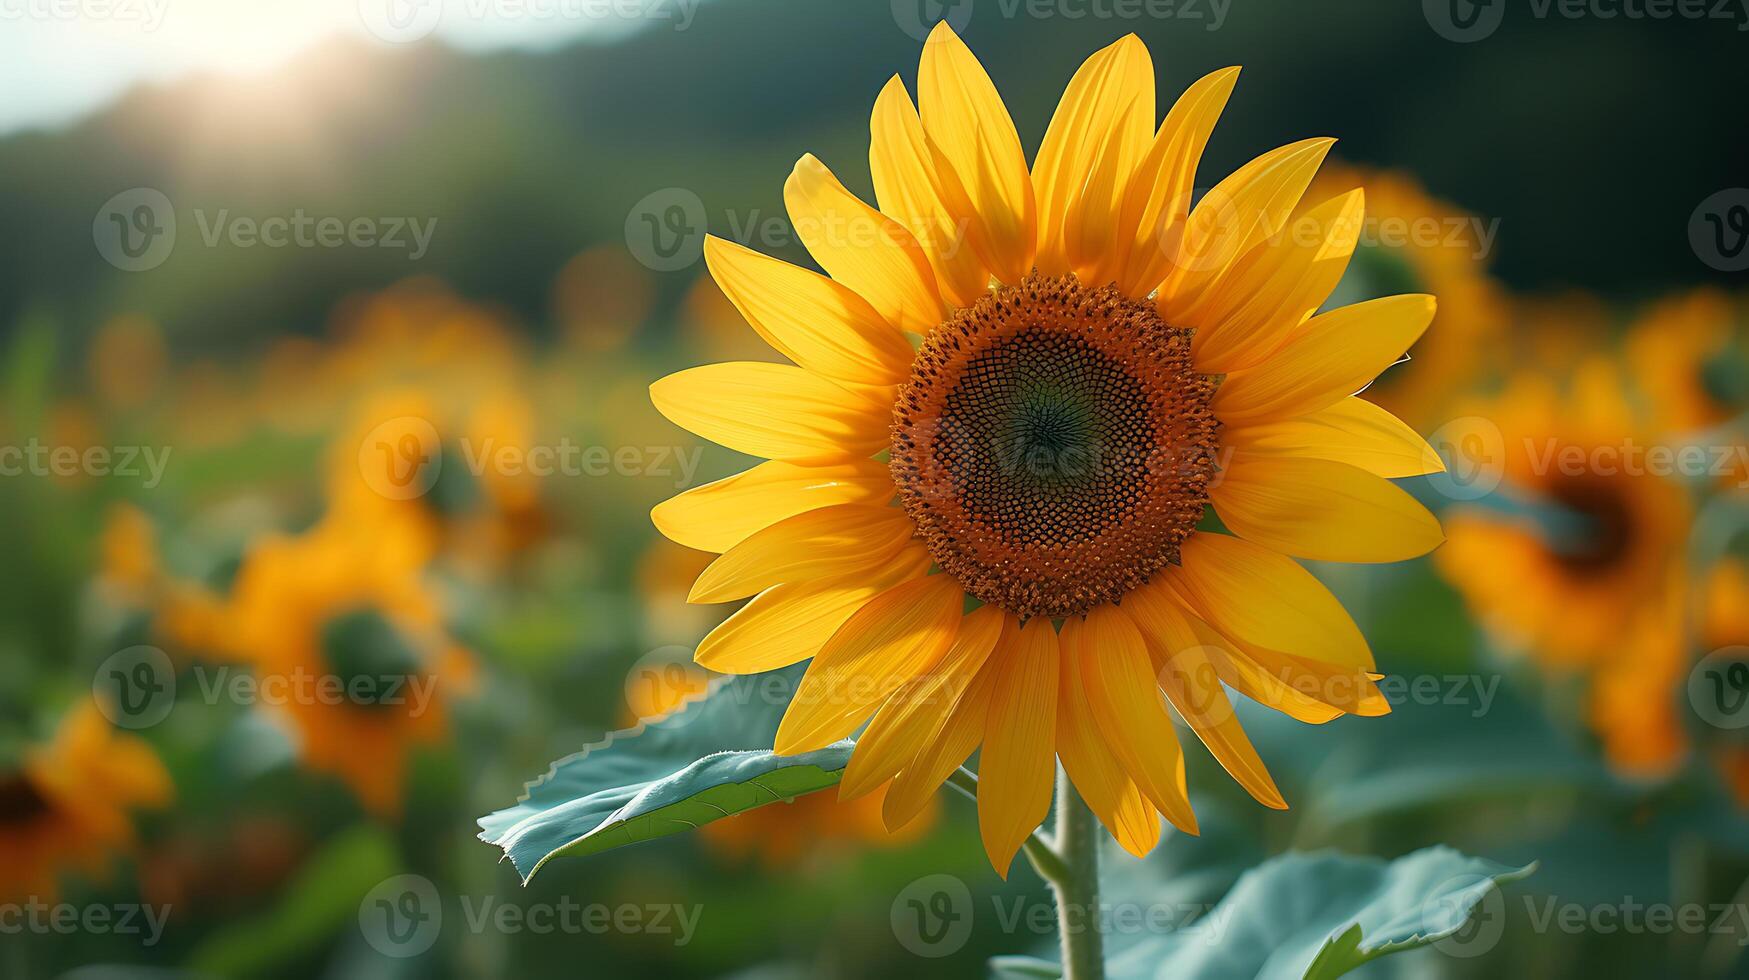 AI generated Beautiful sunflower flowers close up view photo